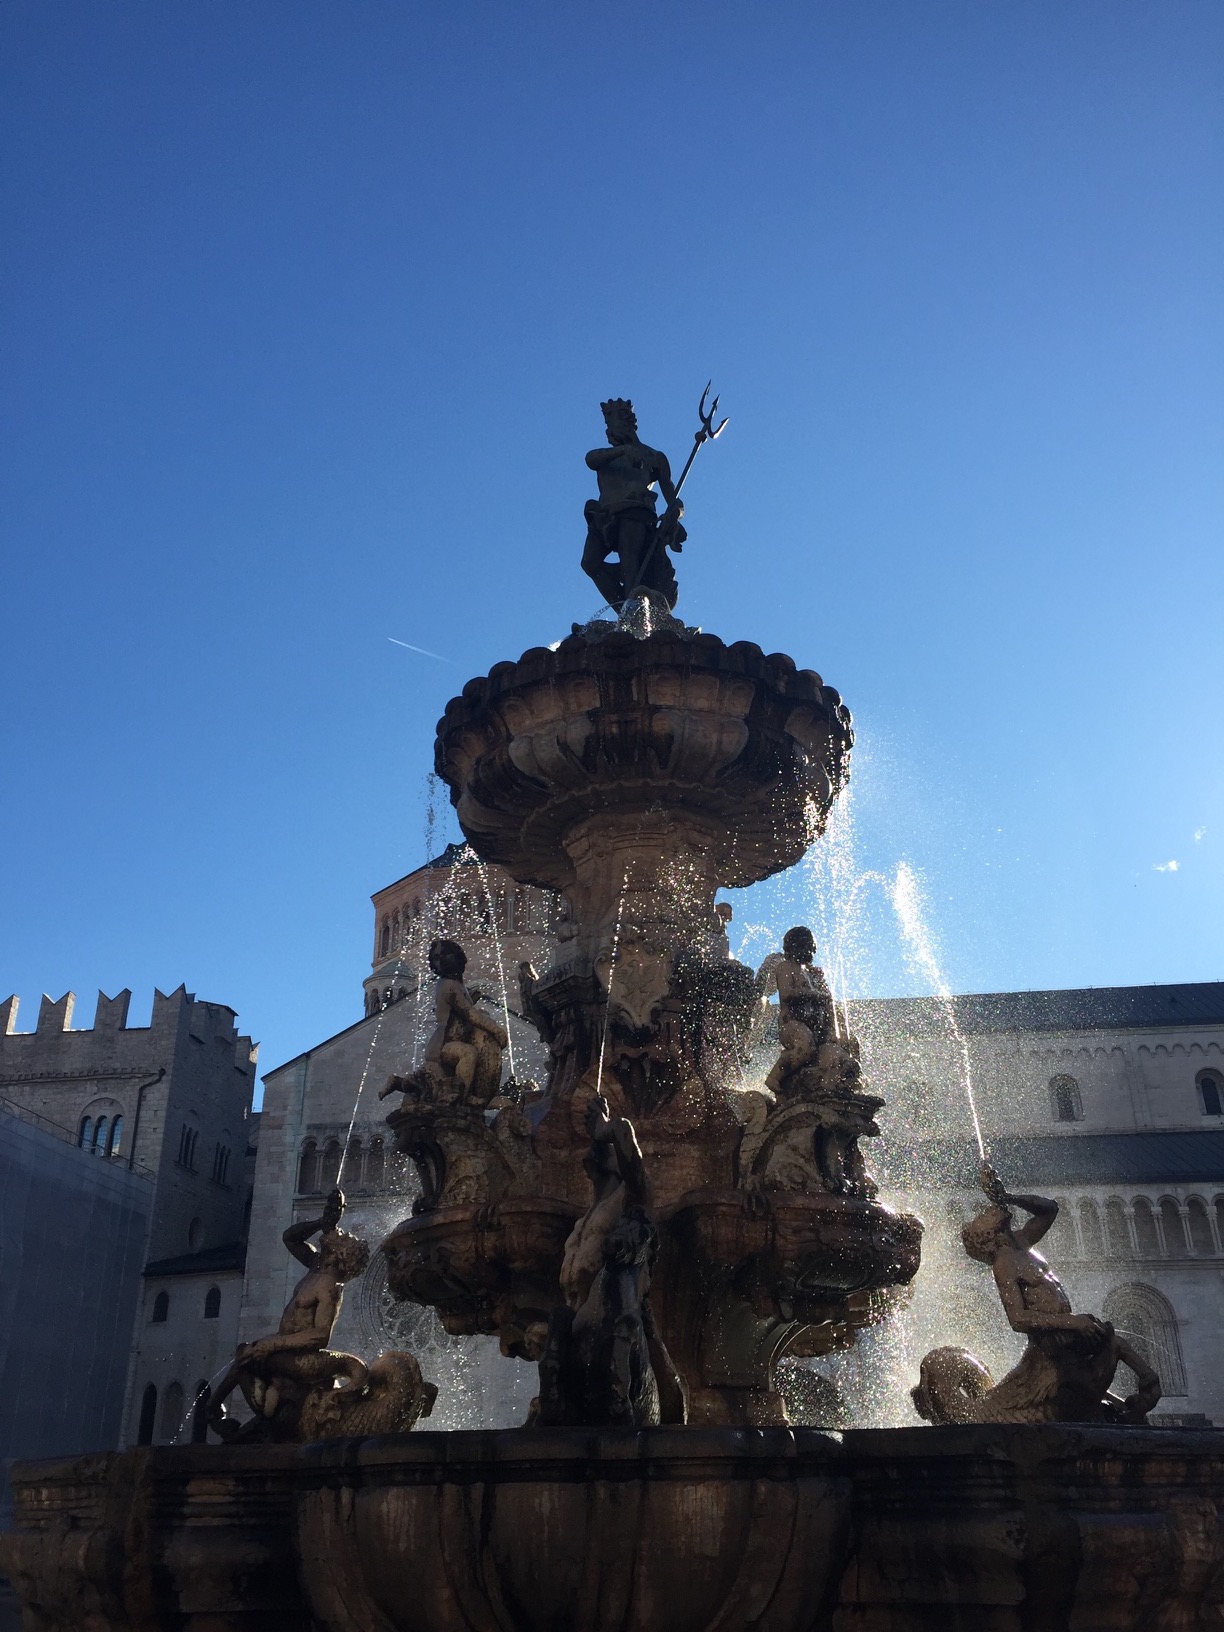 A stone fountain of mermaids spewing water towards a bronze trident-wielding Neptune.